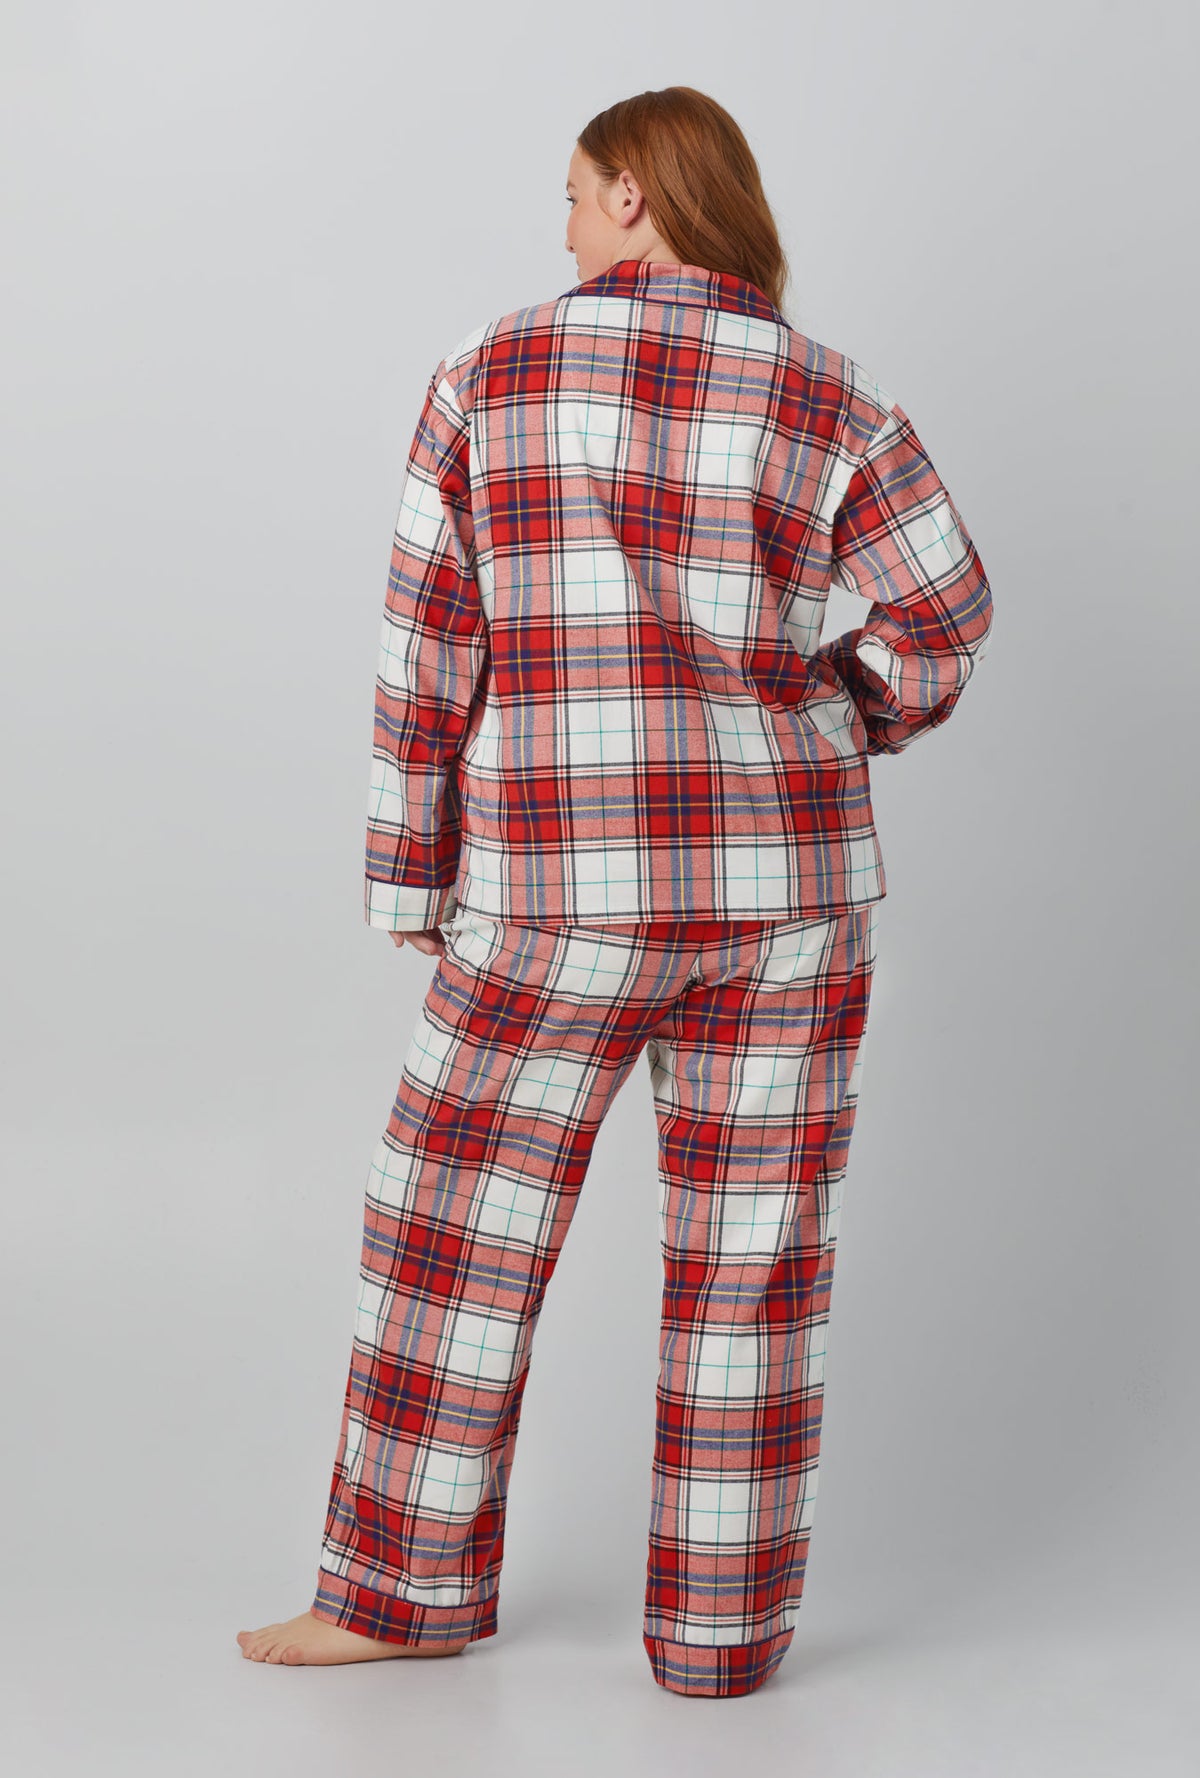 Bedhead Pajamas Original Fit Festive Tartan Pajama Pants - S